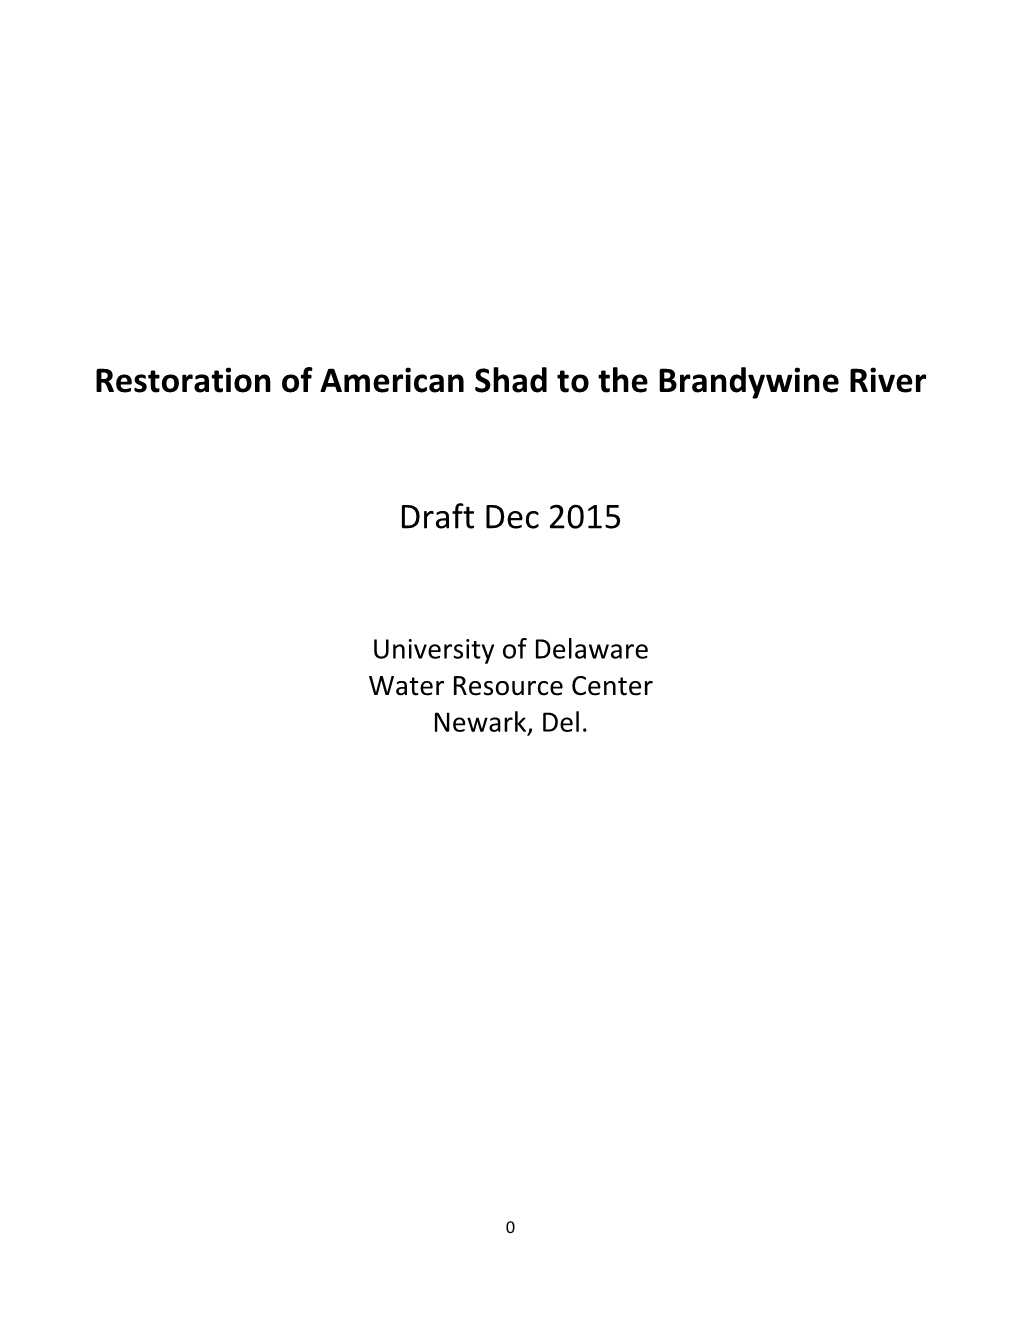 Brandywine River Dam Removal Field Recon Report, December 2015